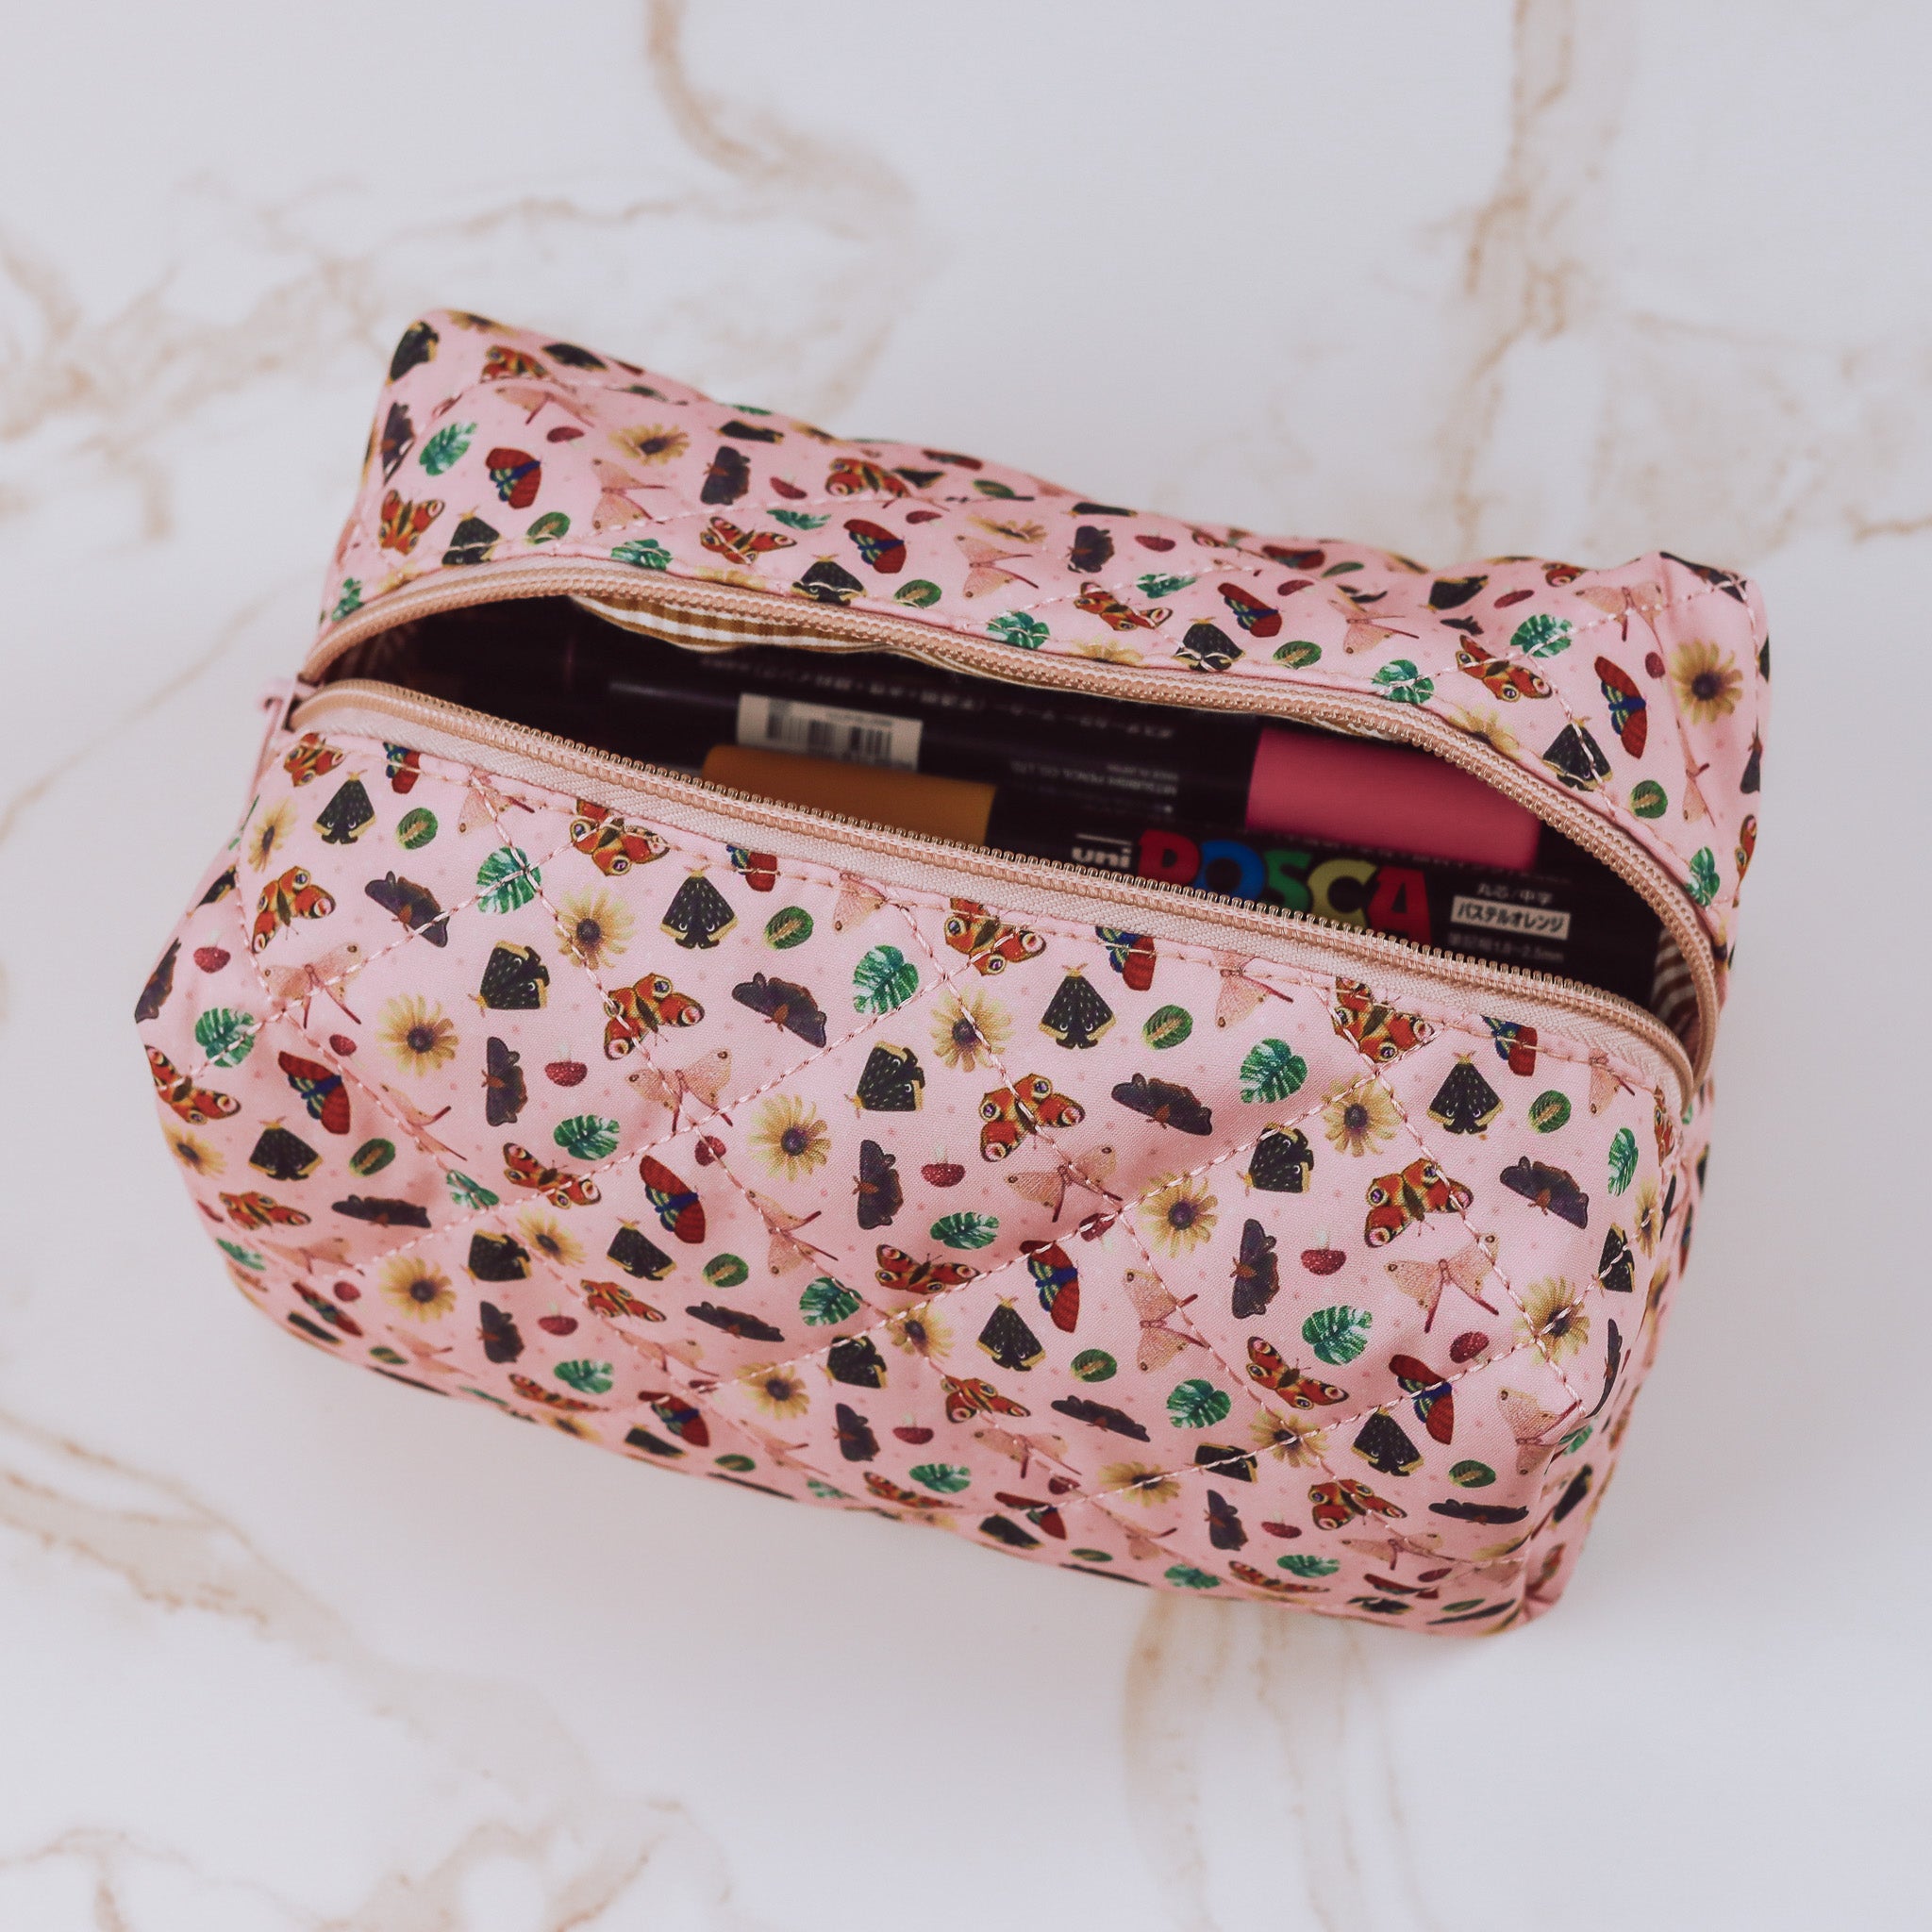 Pencil Case Cosmetic Bag, Lace Cosmetic Makeup Bag